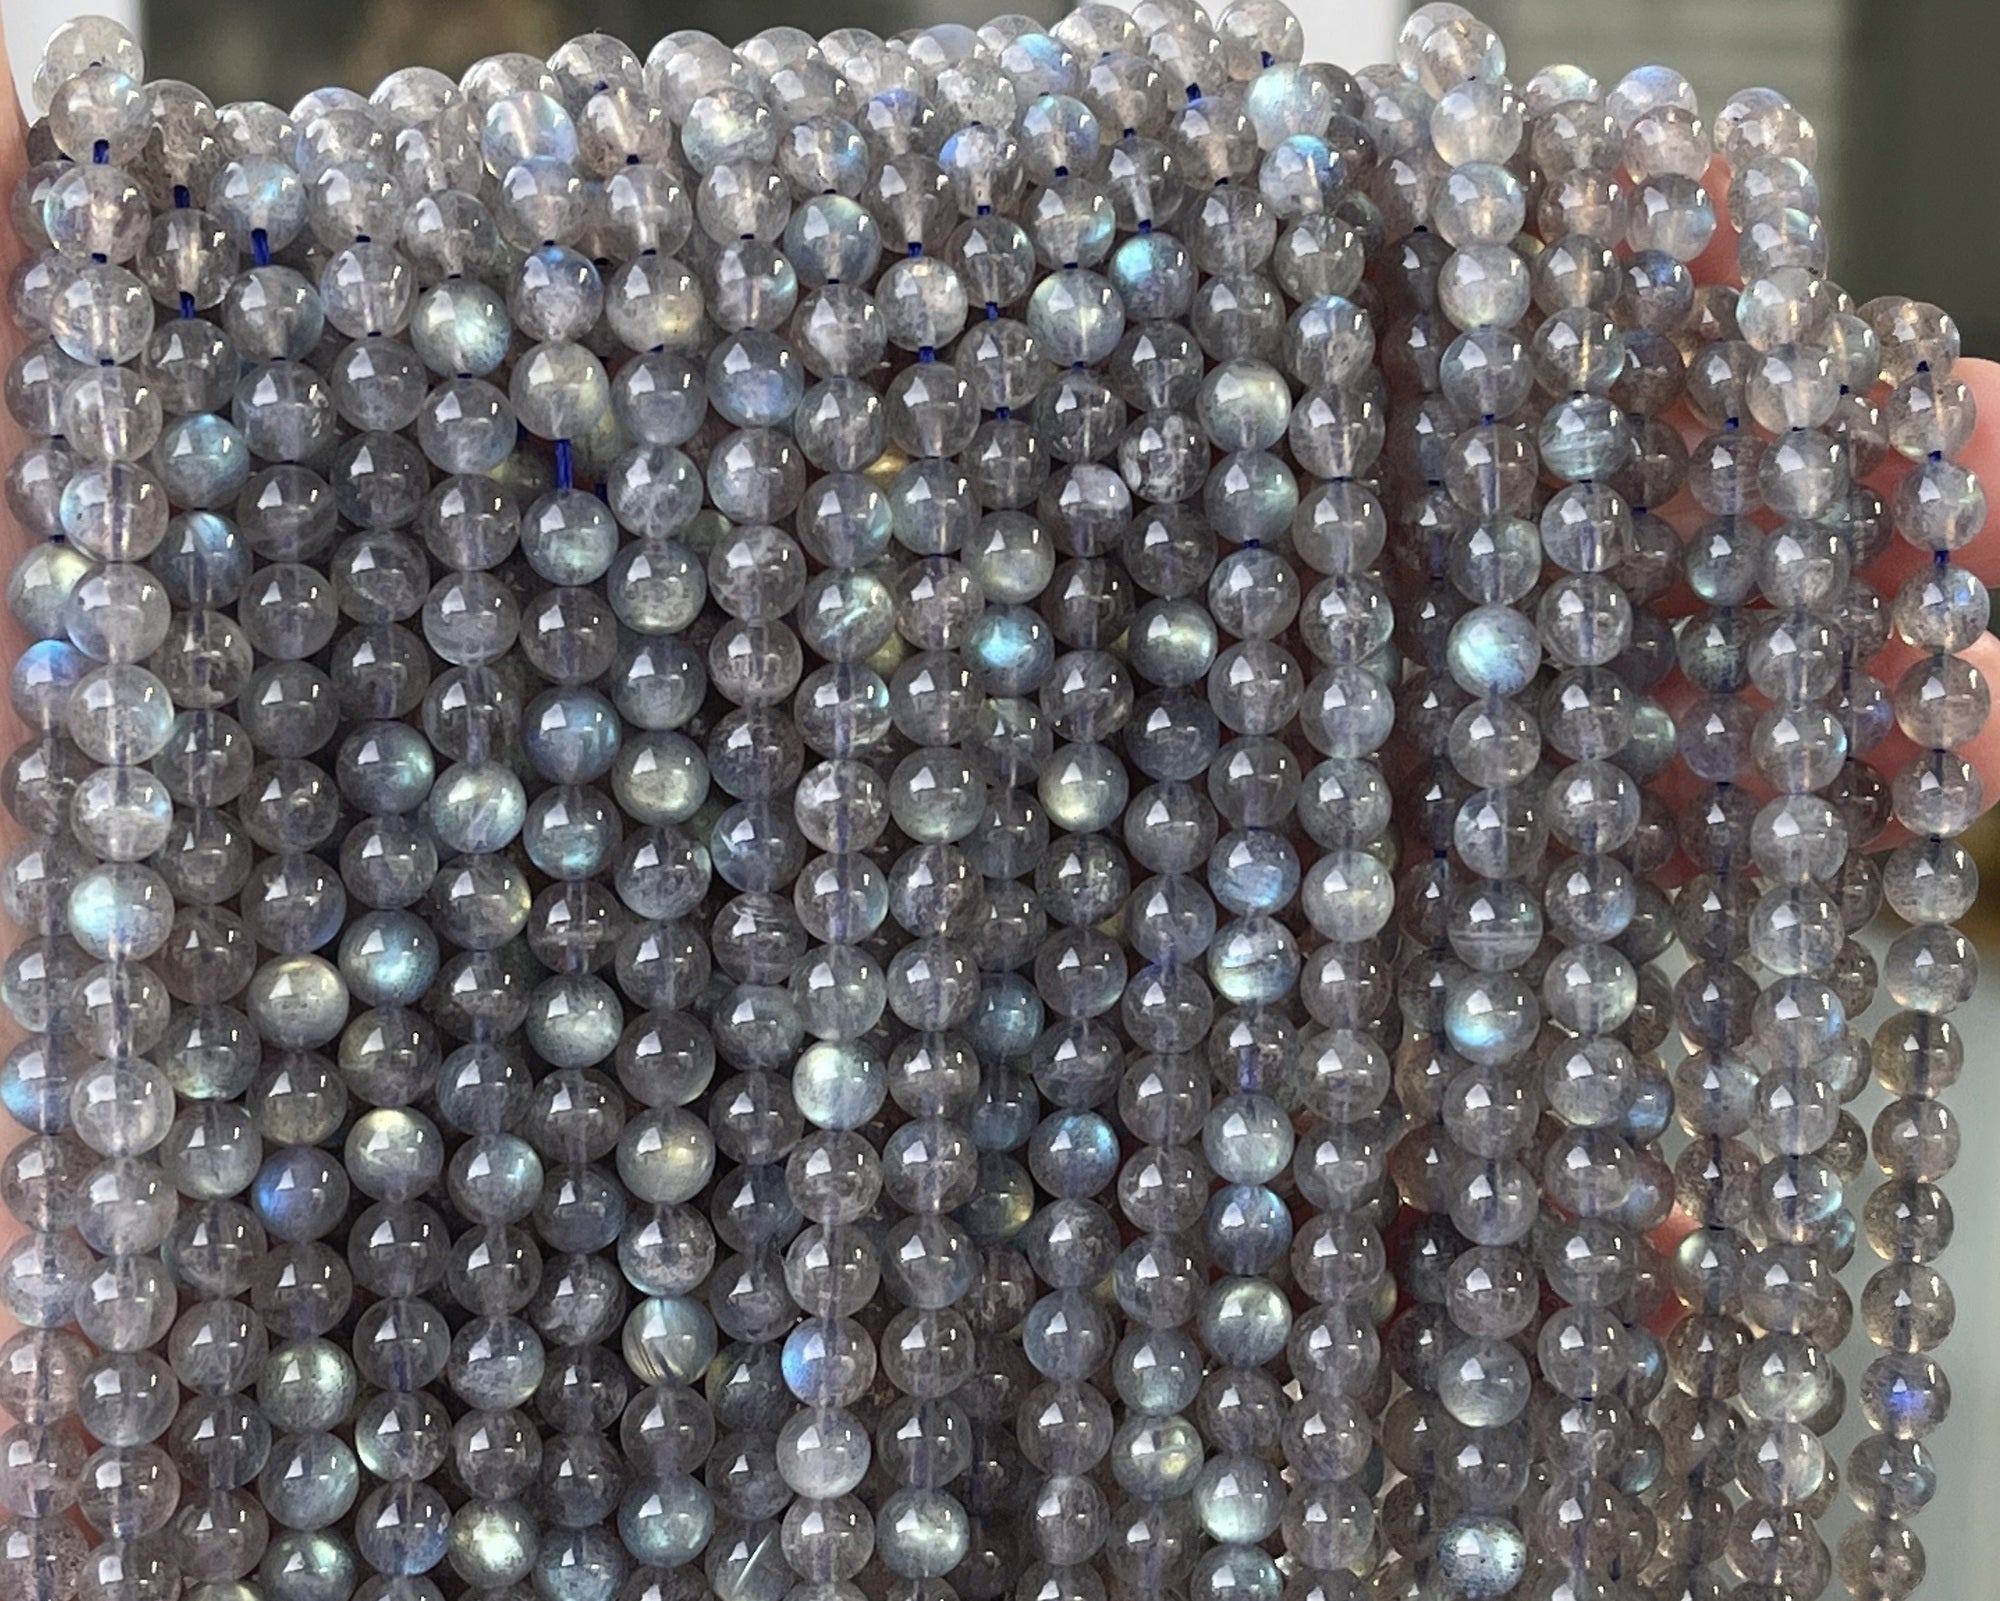 Madagascar Labradorite 6mm round rare flashy natural gemstone beads 15.5" strand